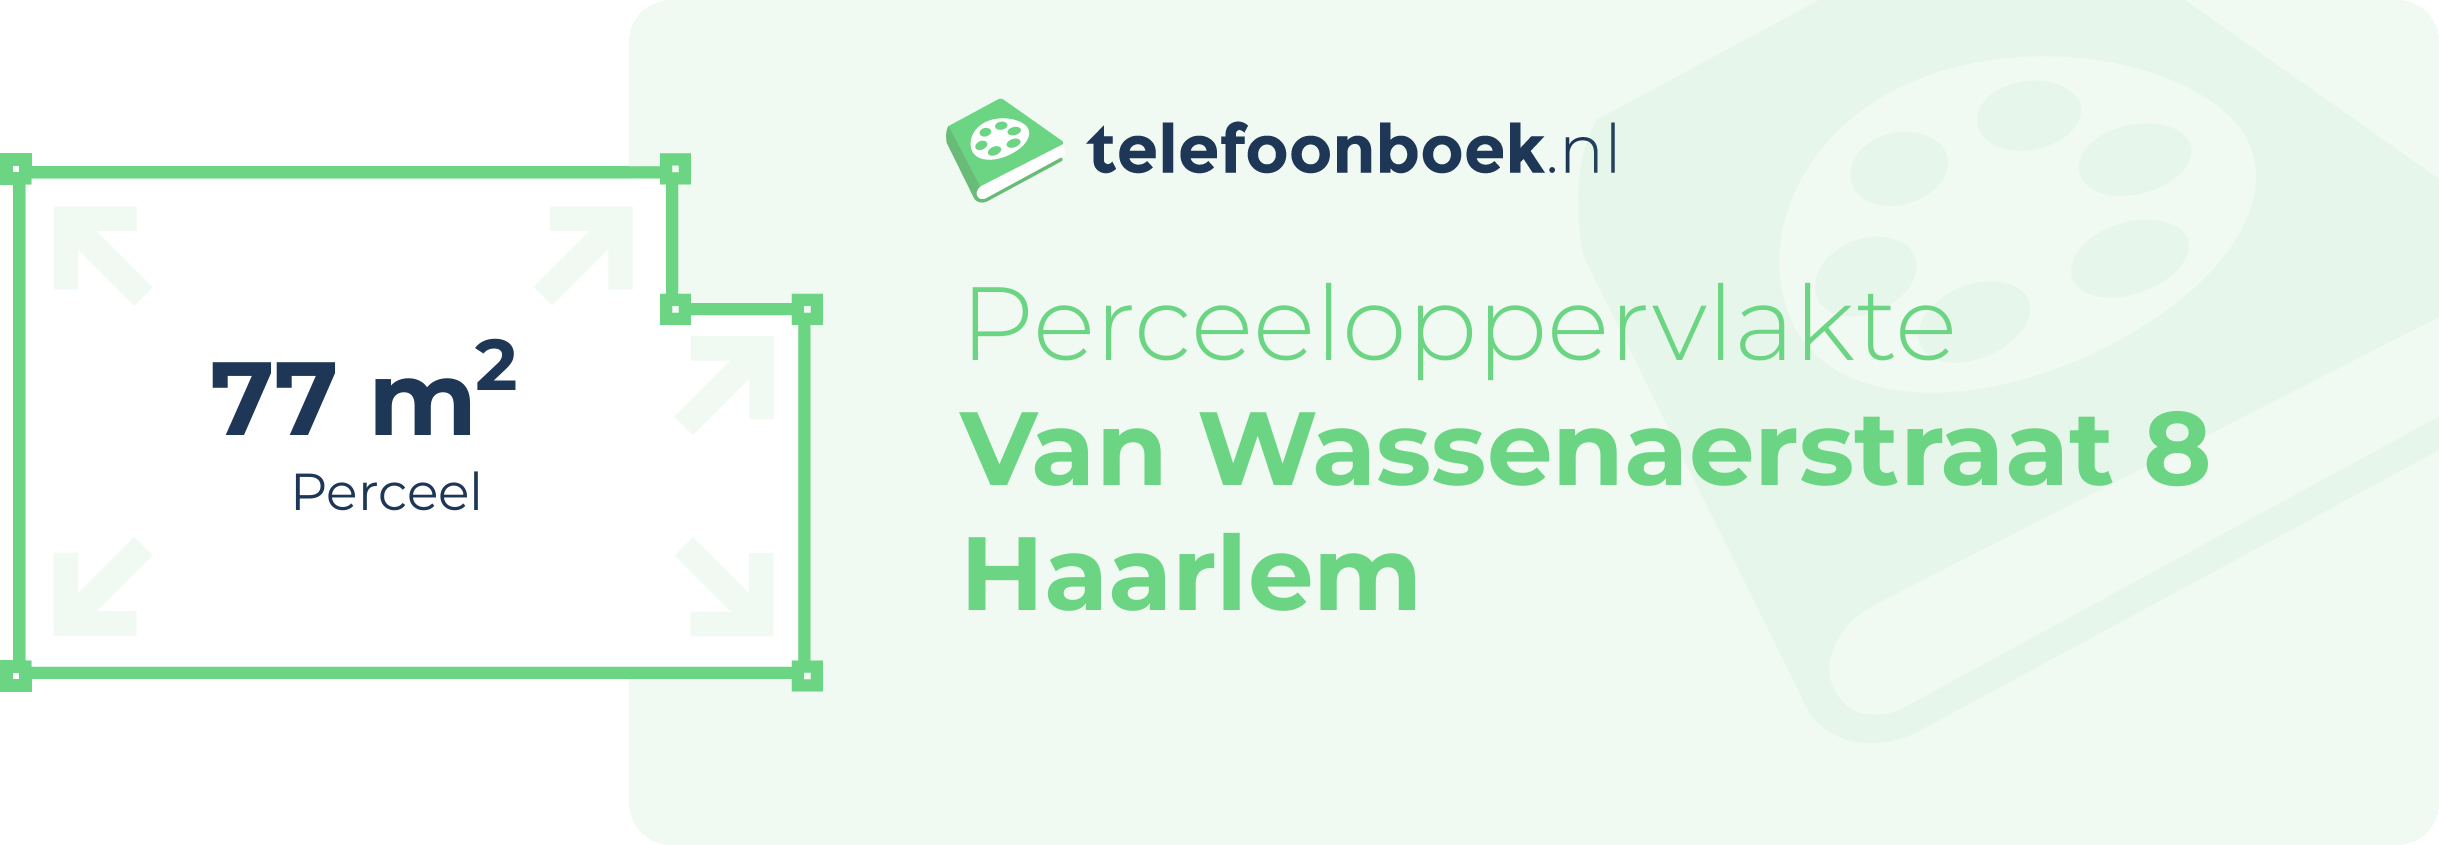 Perceeloppervlakte Van Wassenaerstraat 8 Haarlem